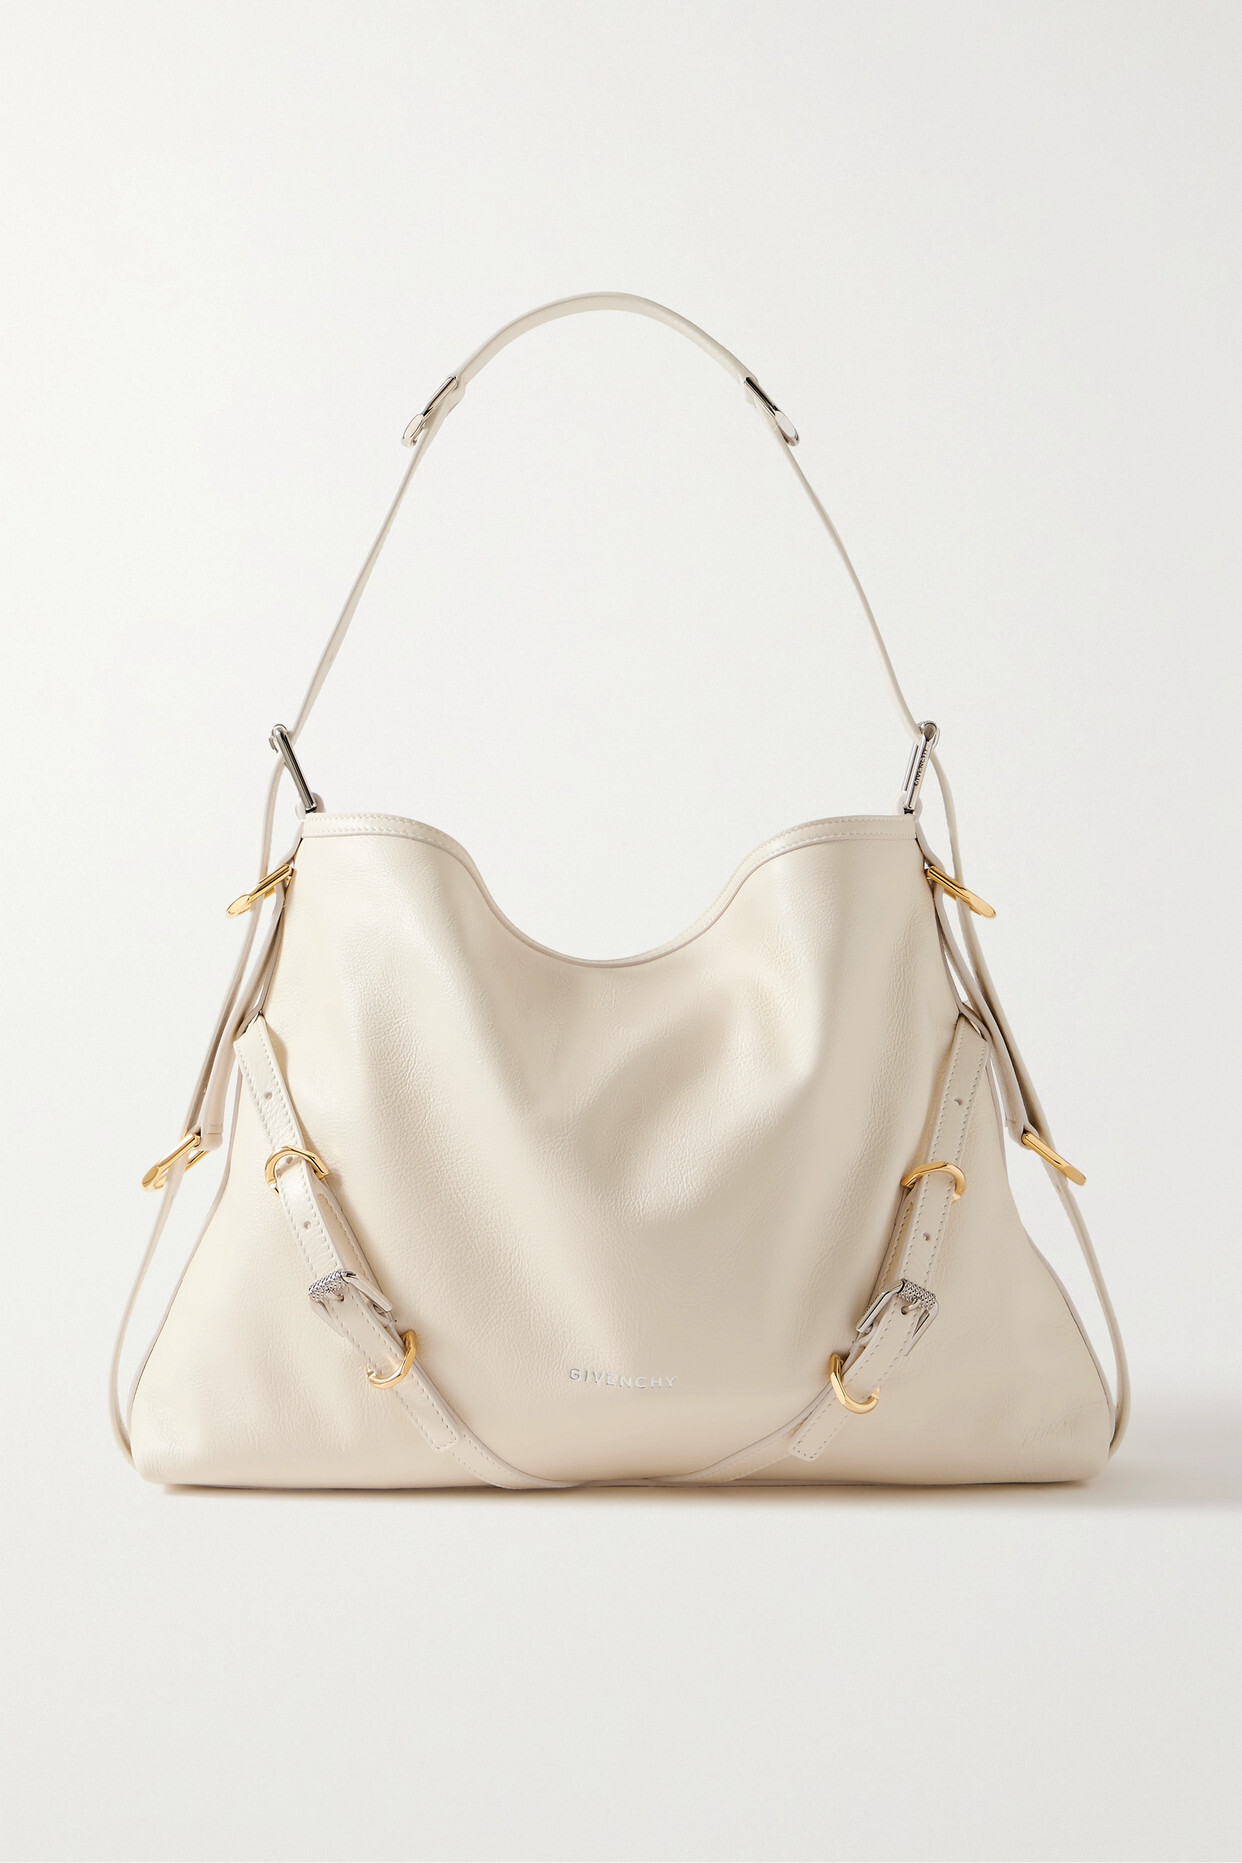 Givenchy - Voyou Party Medium Leather Shoulder Bag - Ivory